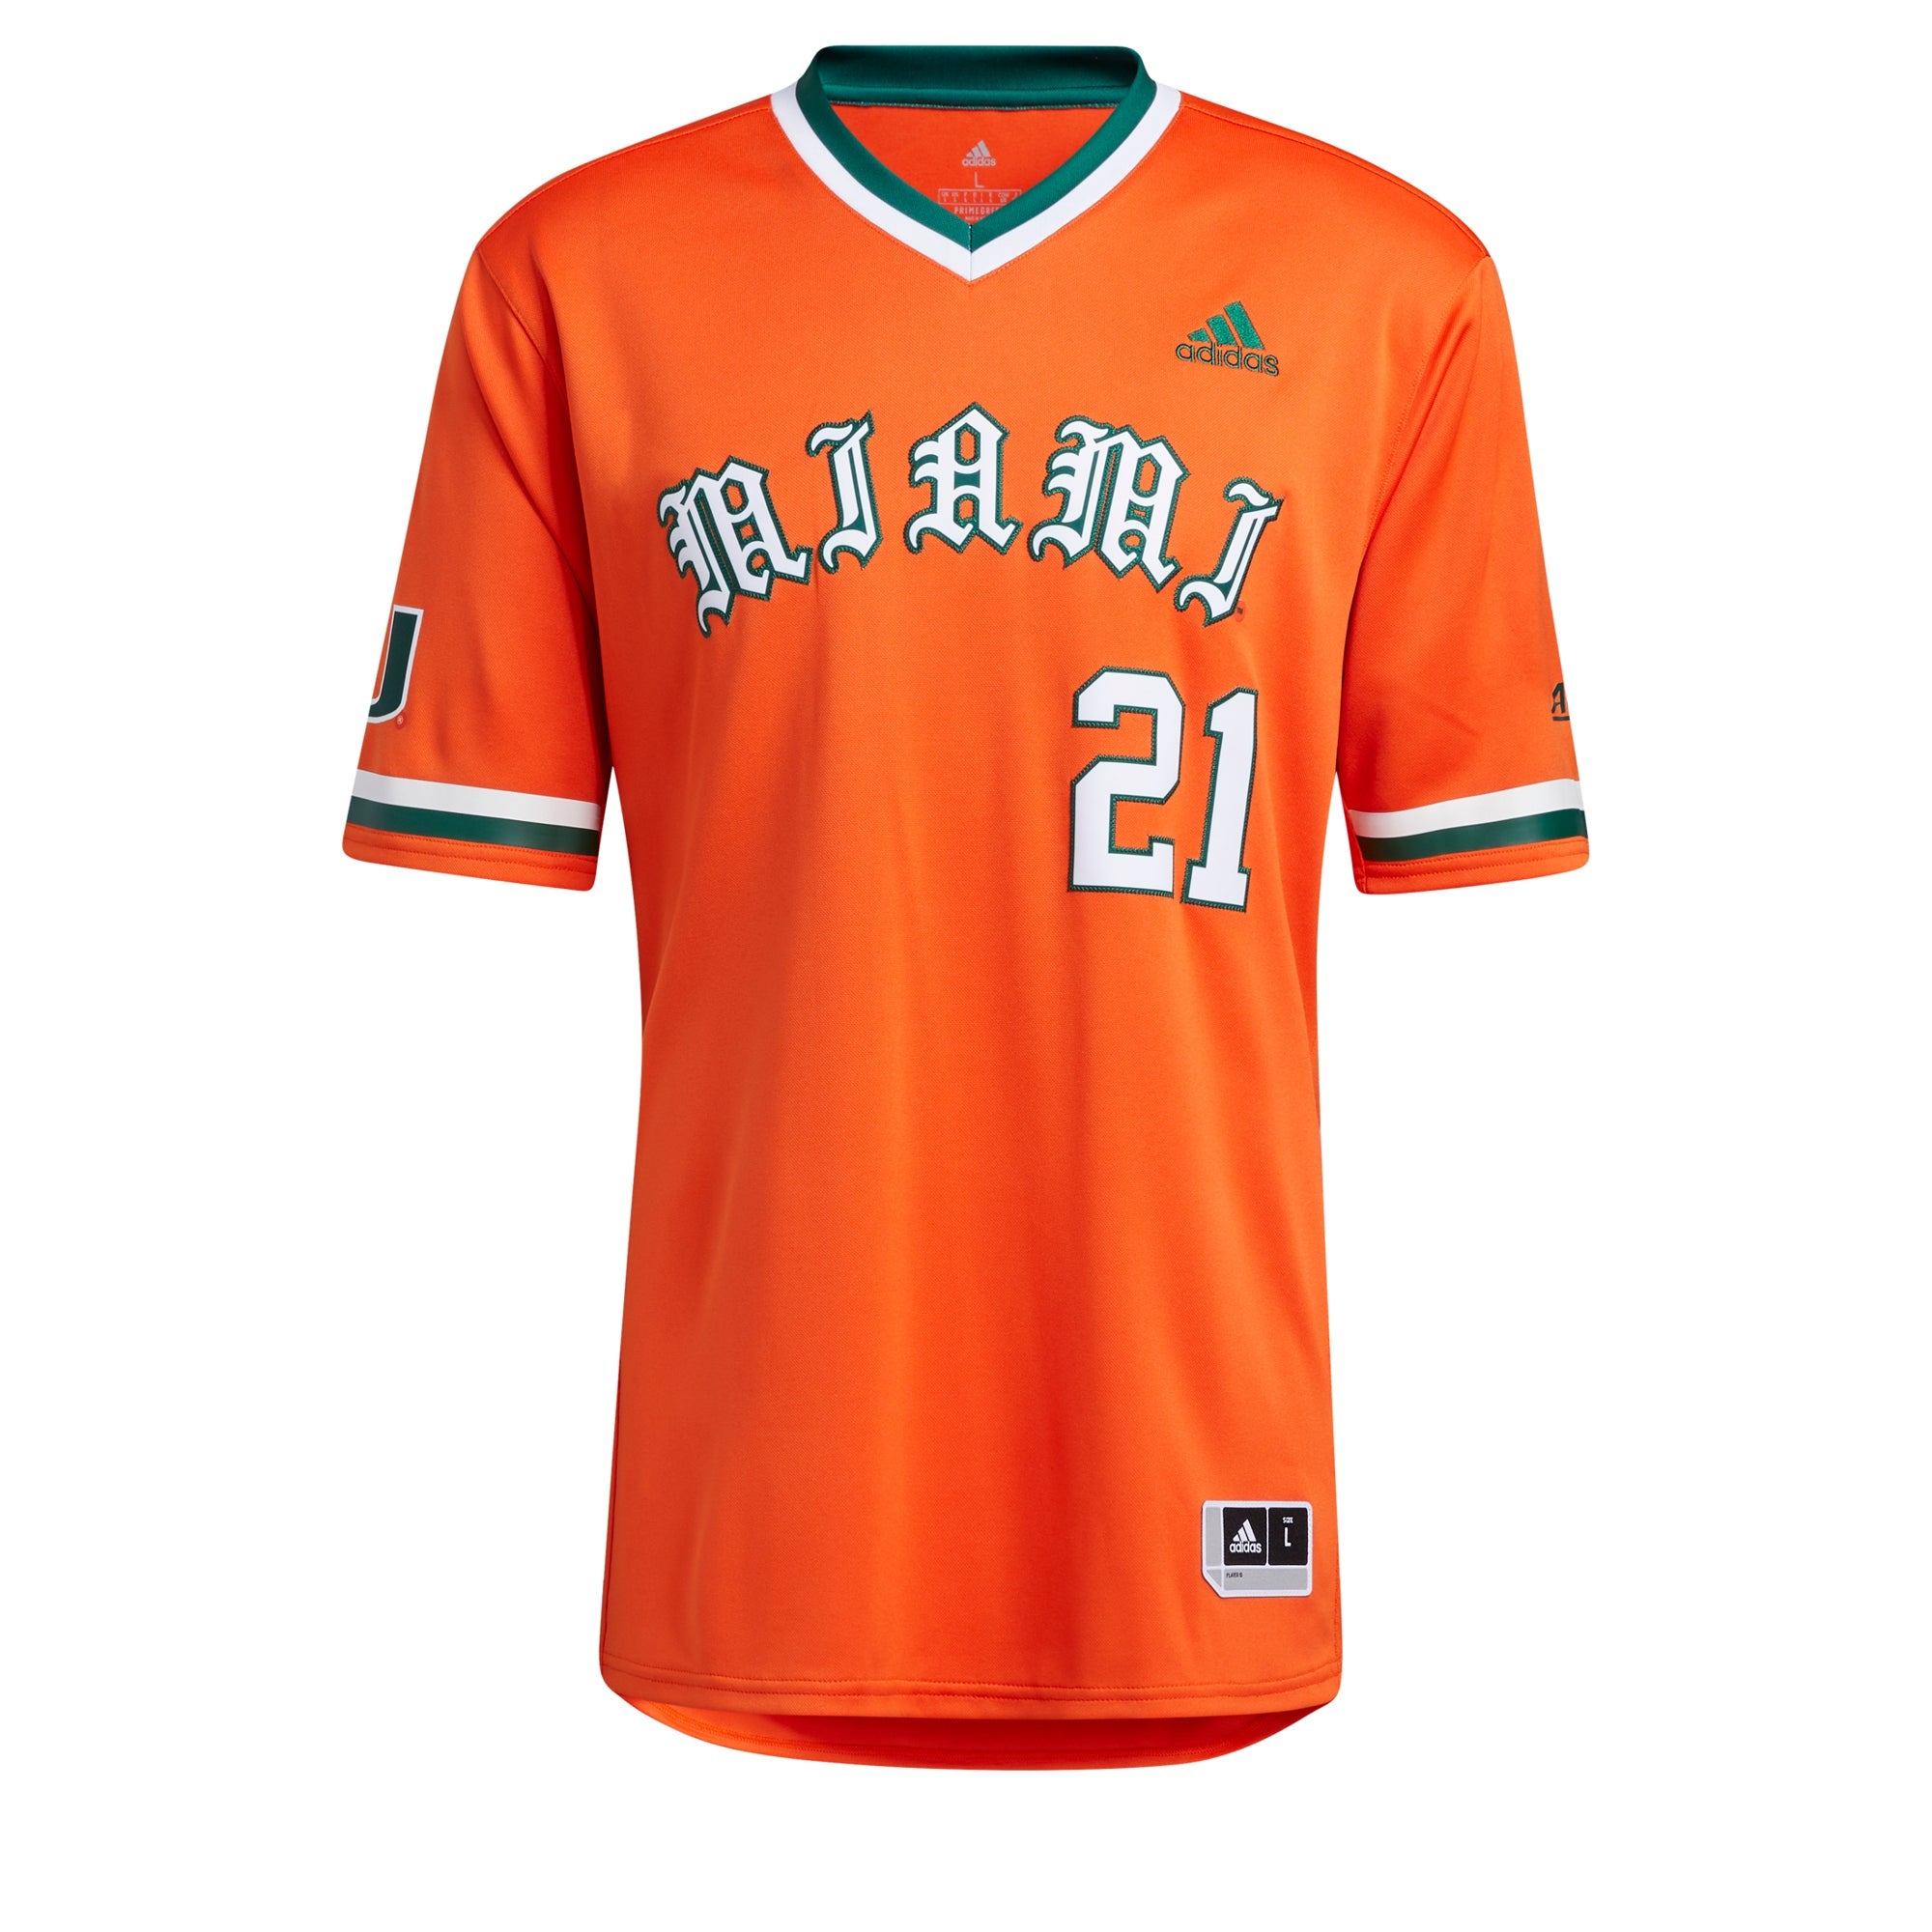 Miami Hurricanes Adidas Baseball Shirt Team Issued Practice Shirt #14 XL